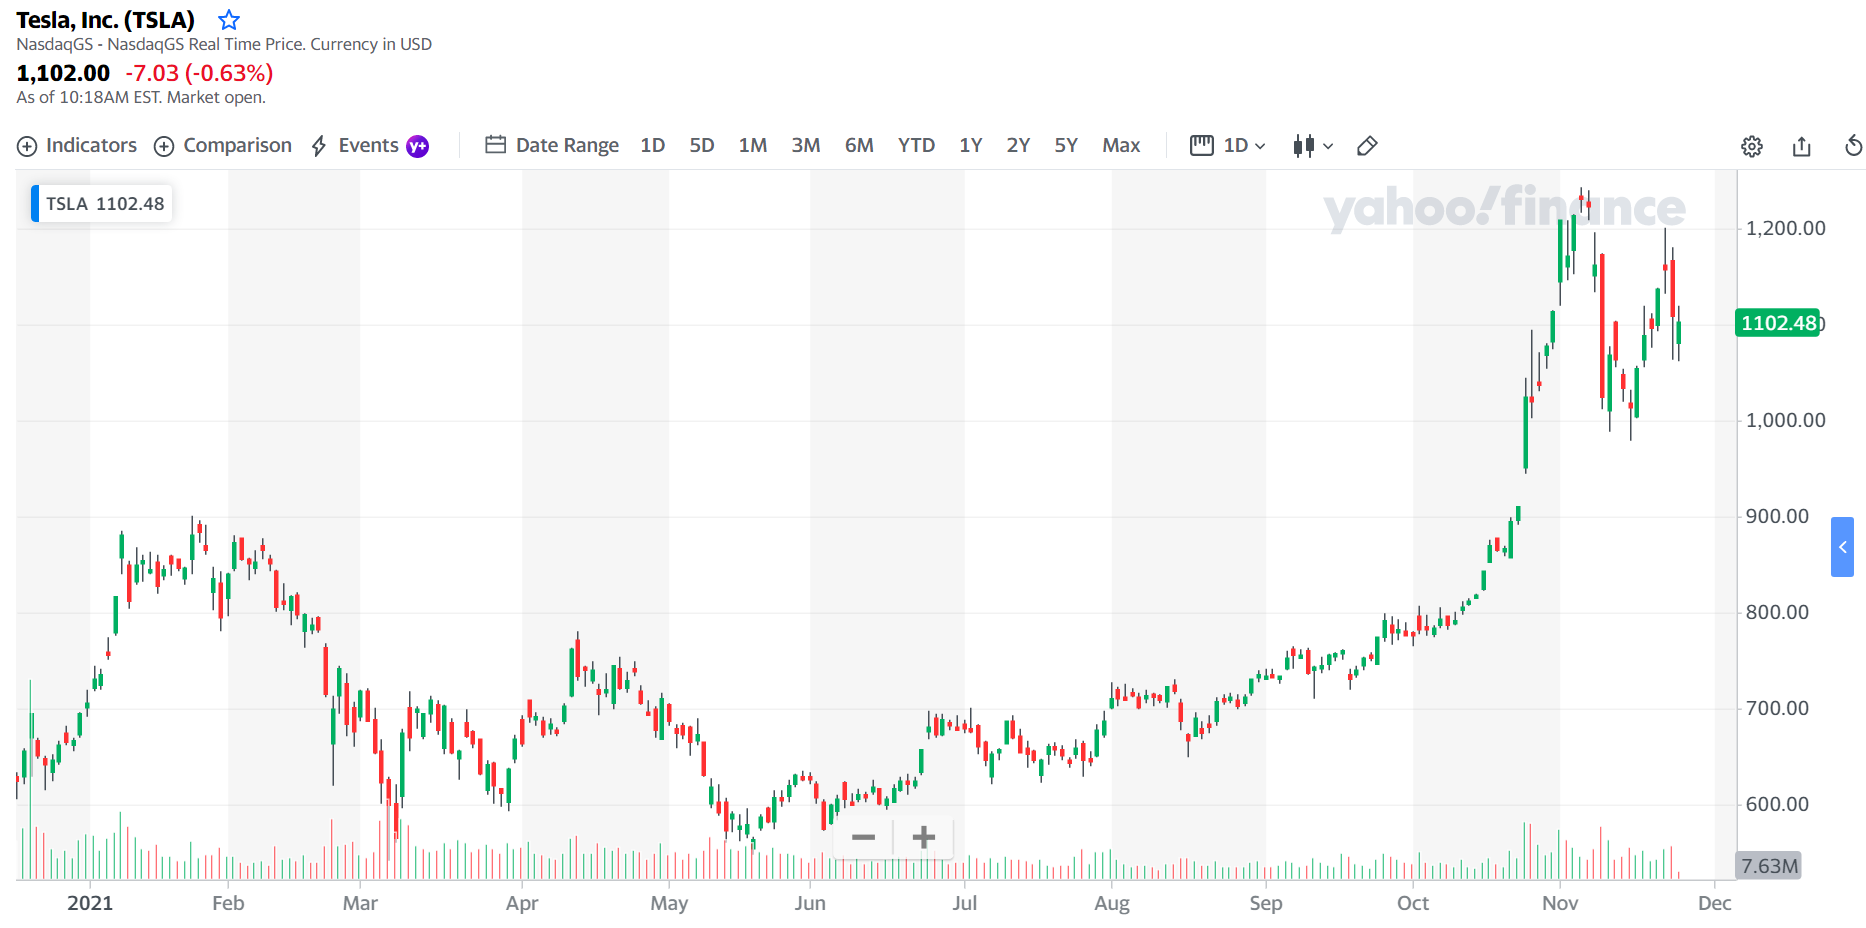 Tesla stock historical price data